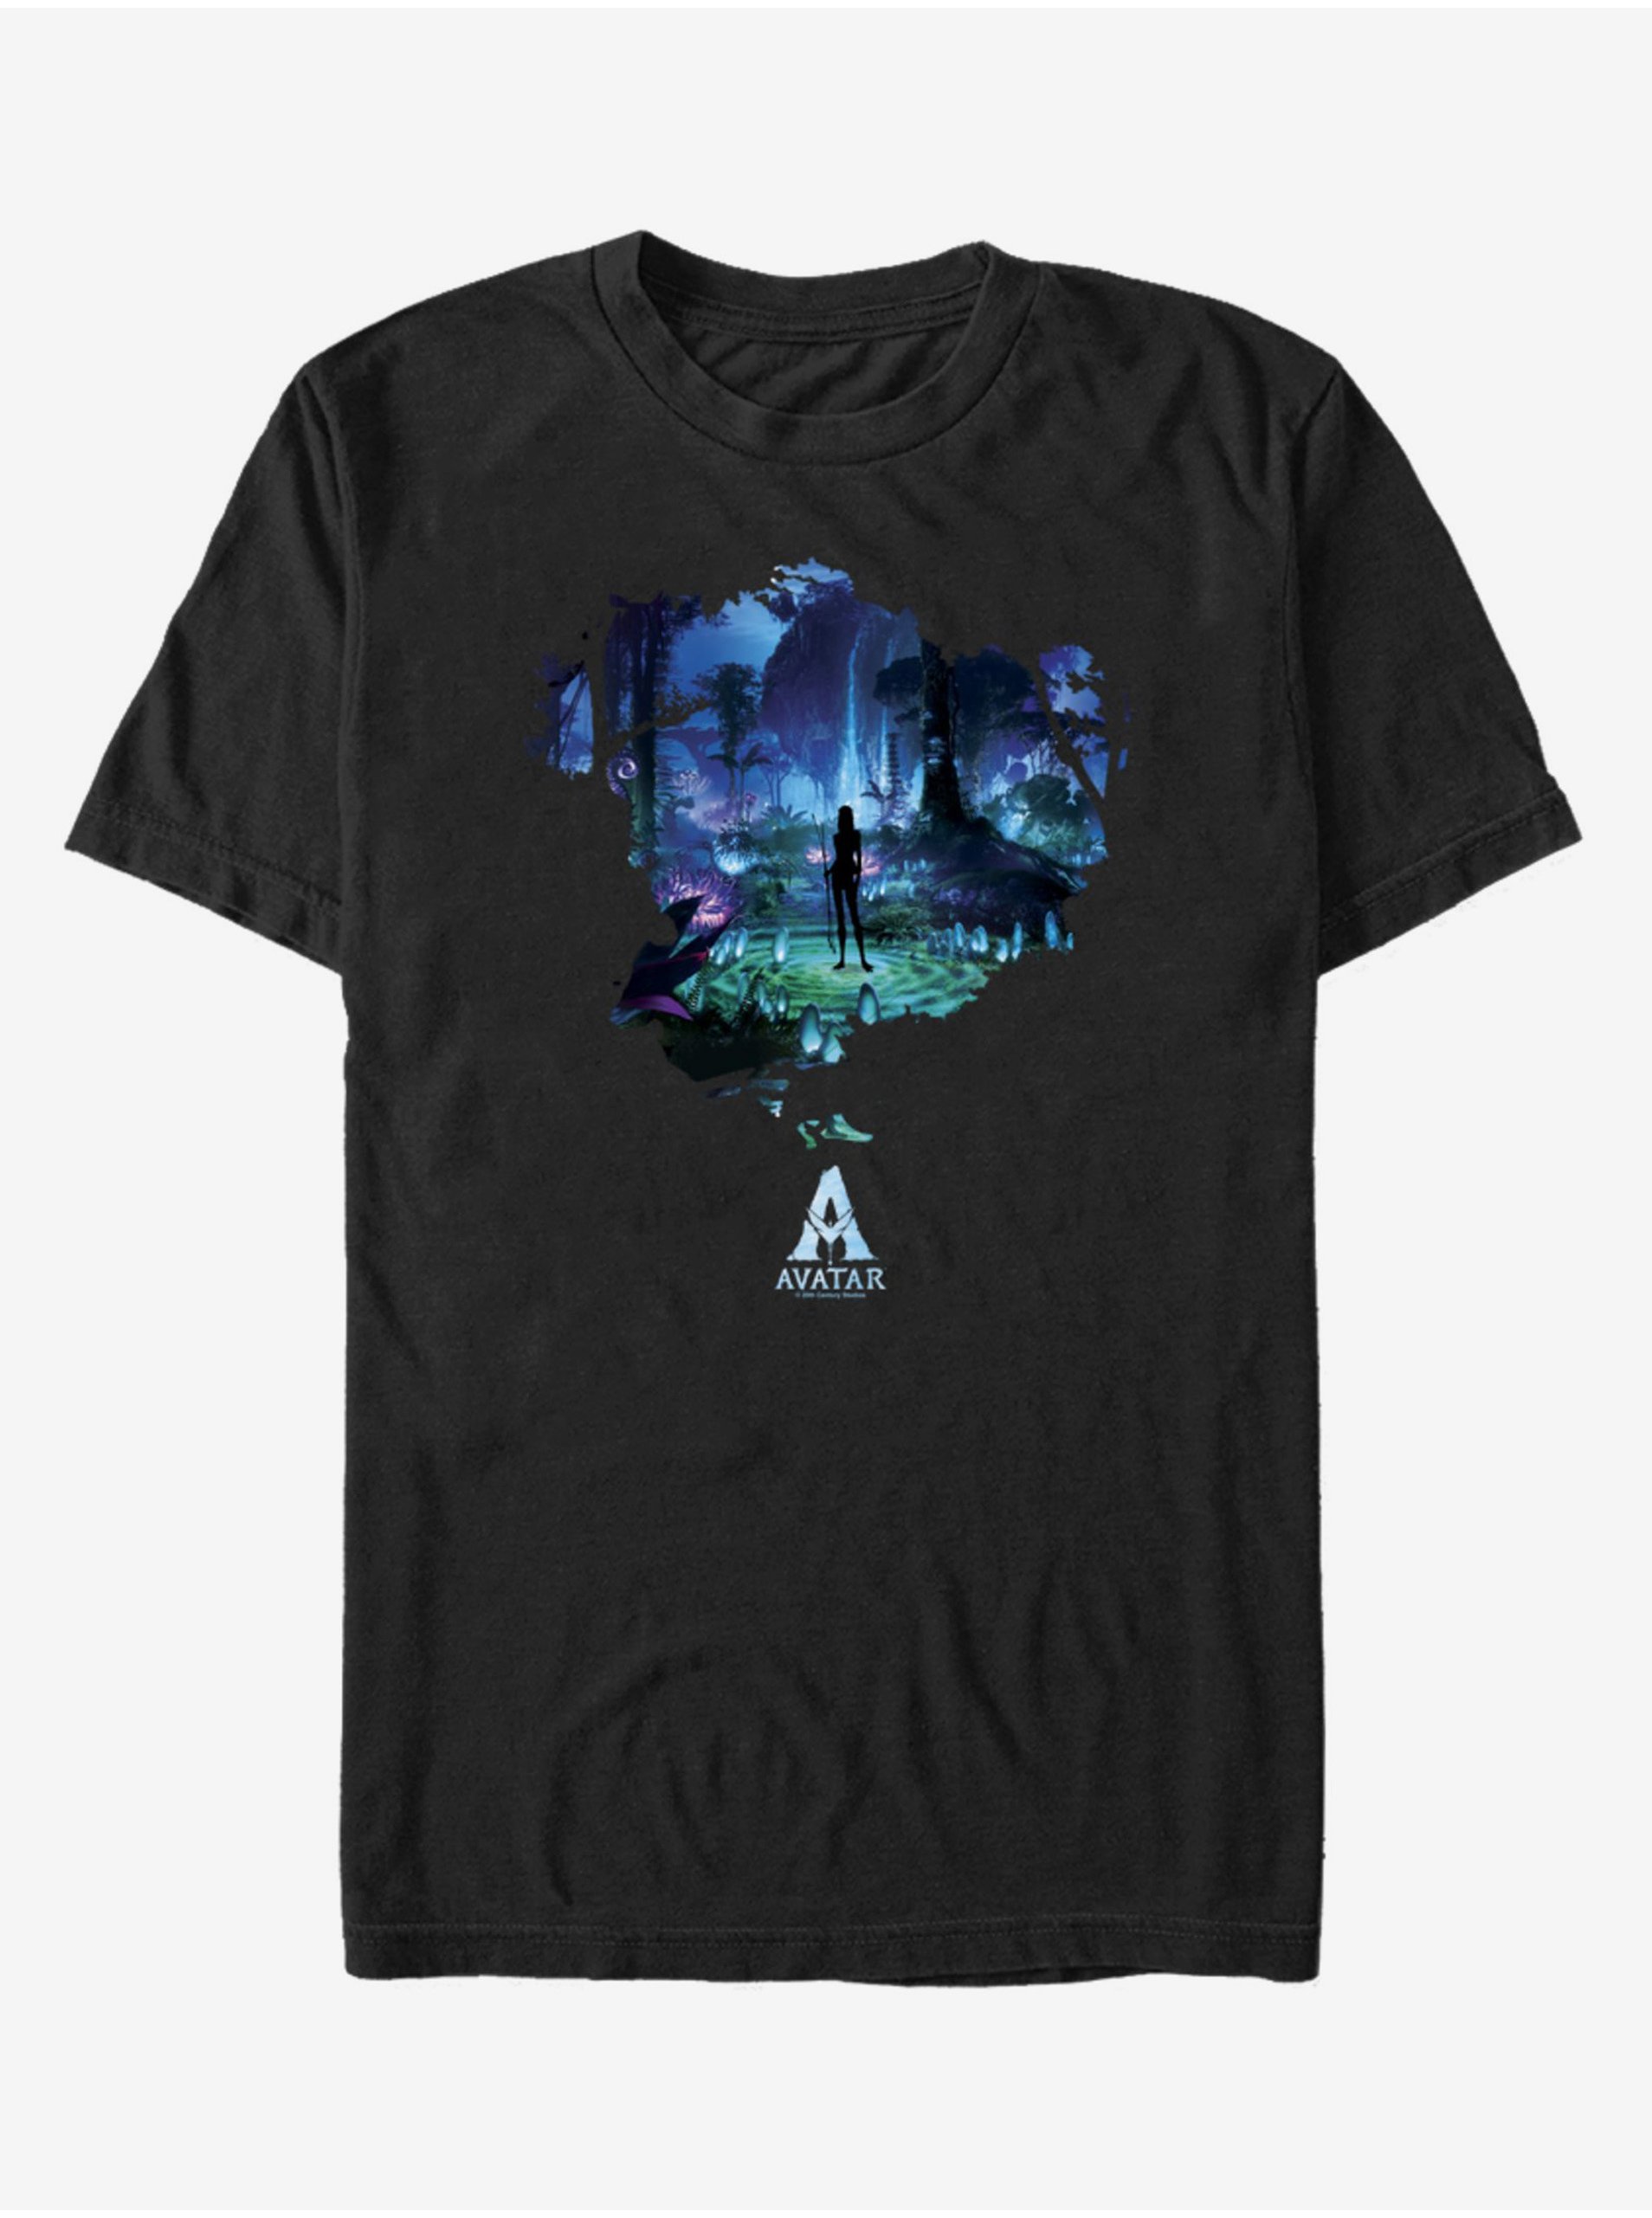 E-shop Noční Pandora Avatar ZOOT. FAN Twentieth Century Fox - unisex tričko